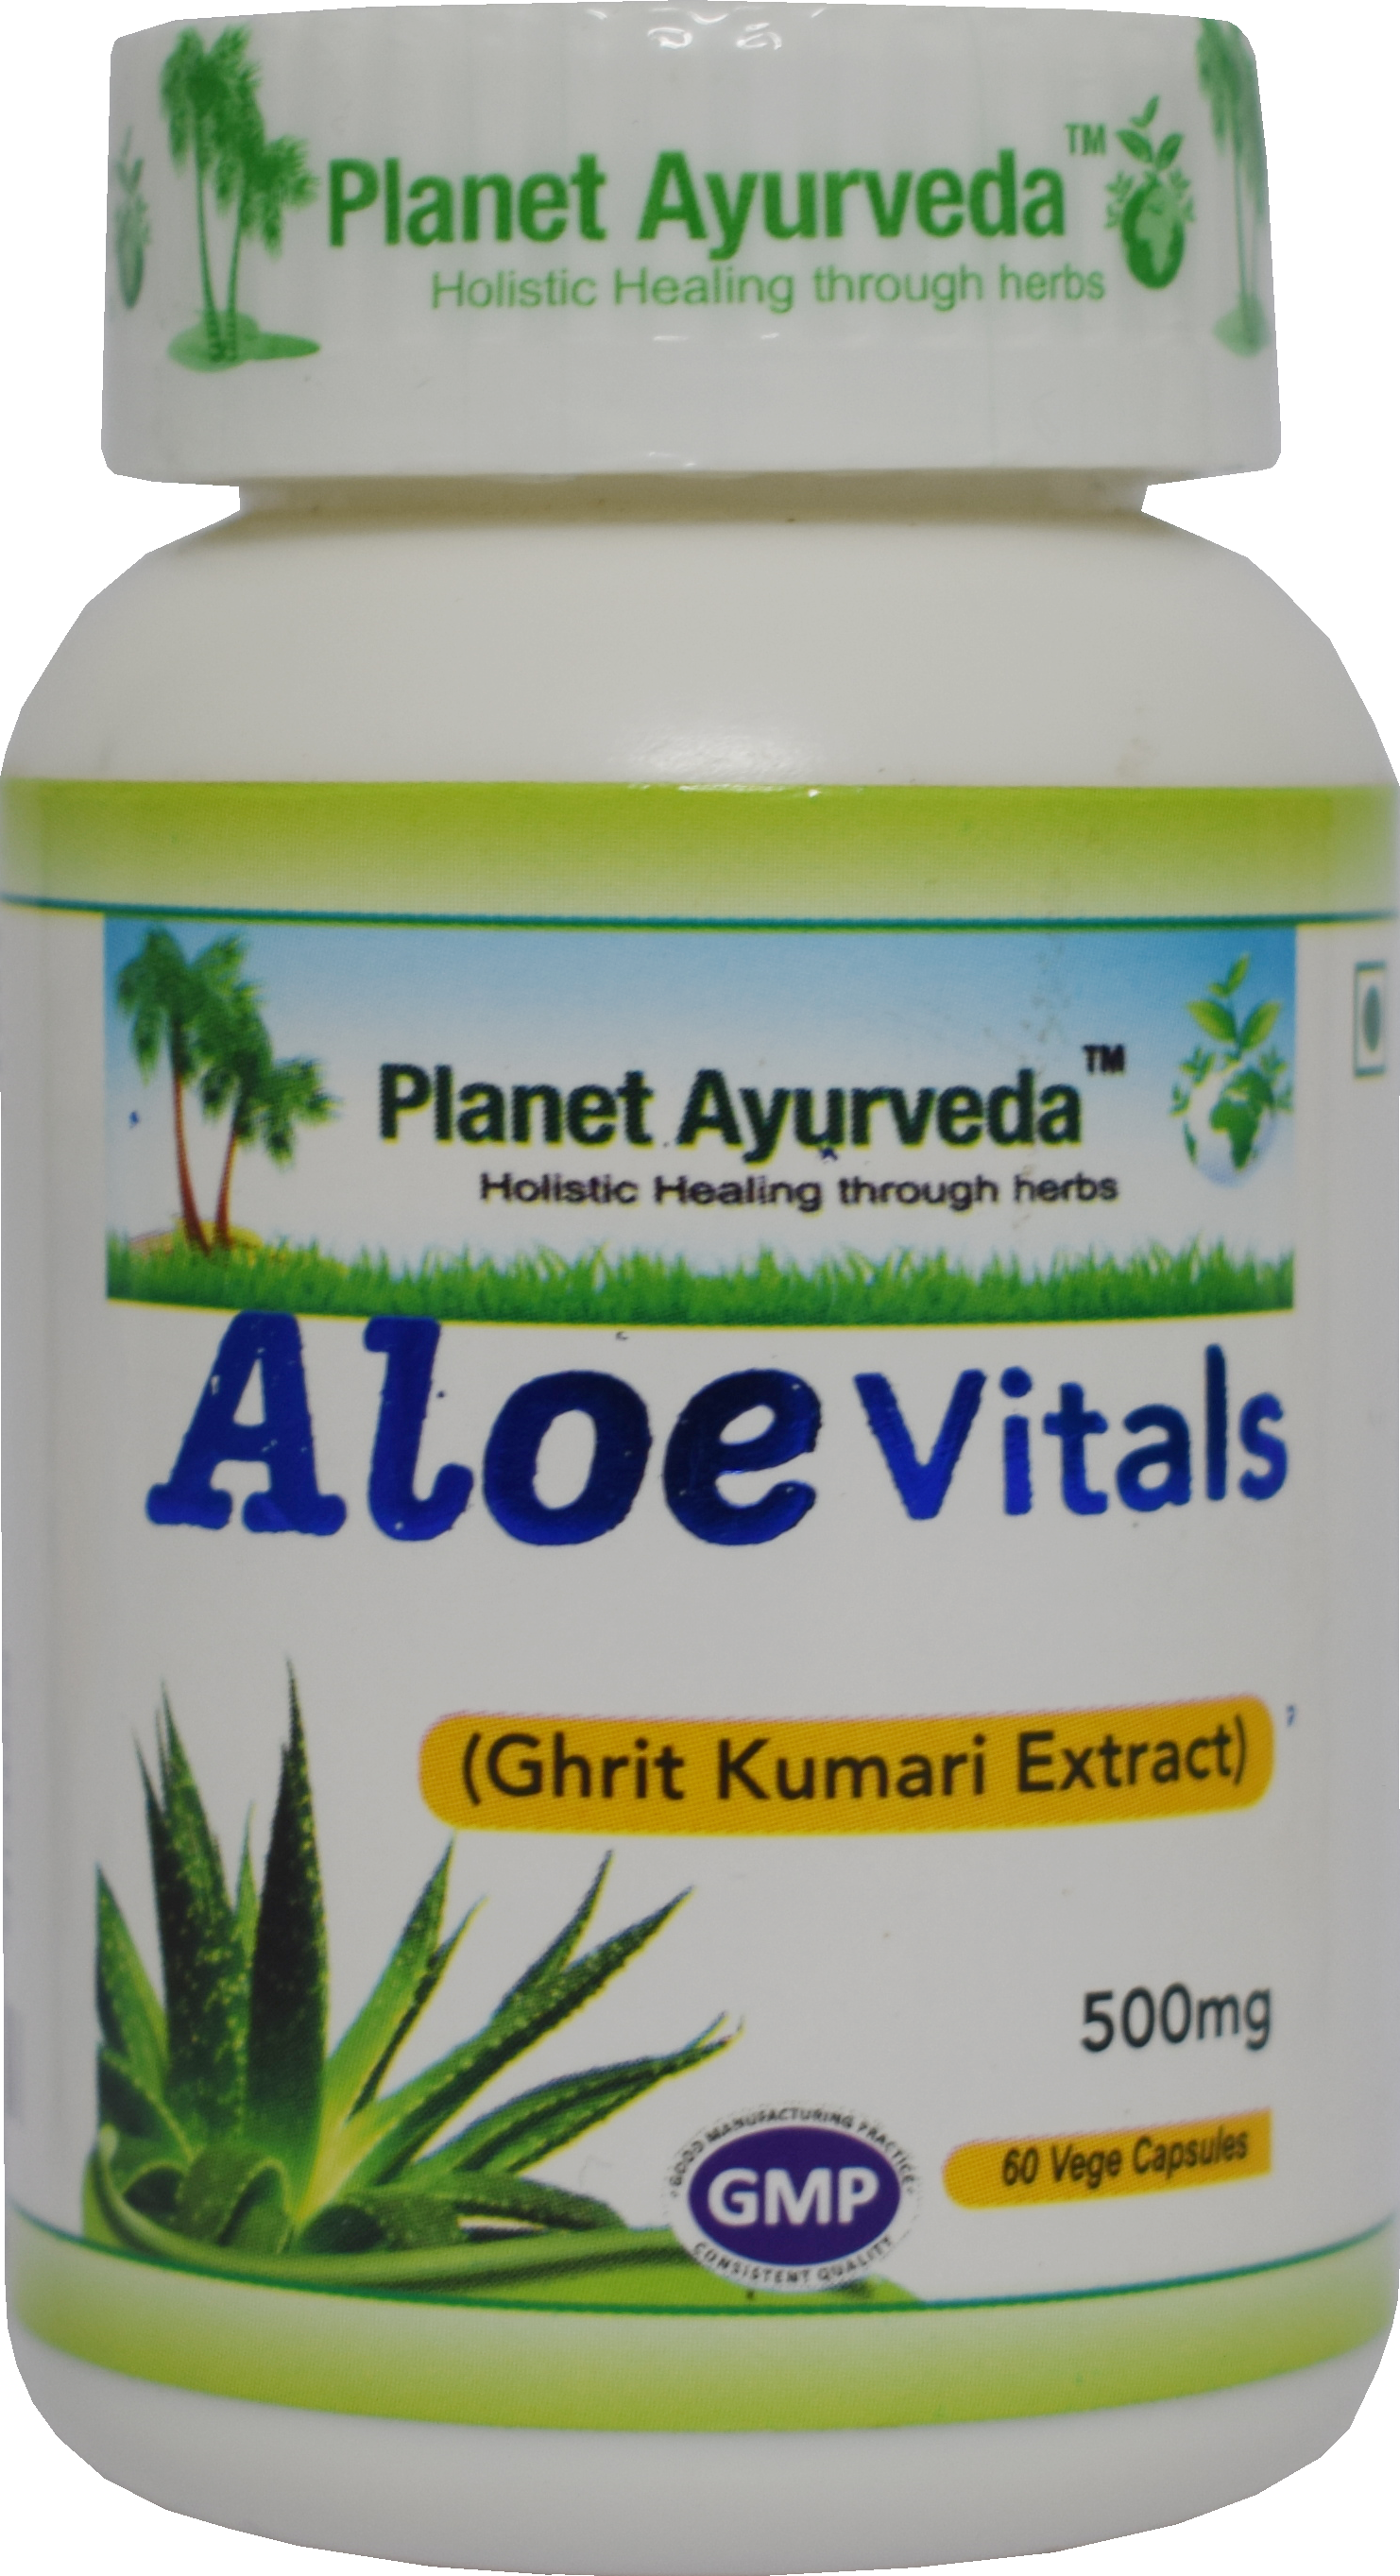 Buy Planet Ayurveda Aloe Vitals Capsules at Best Price Online